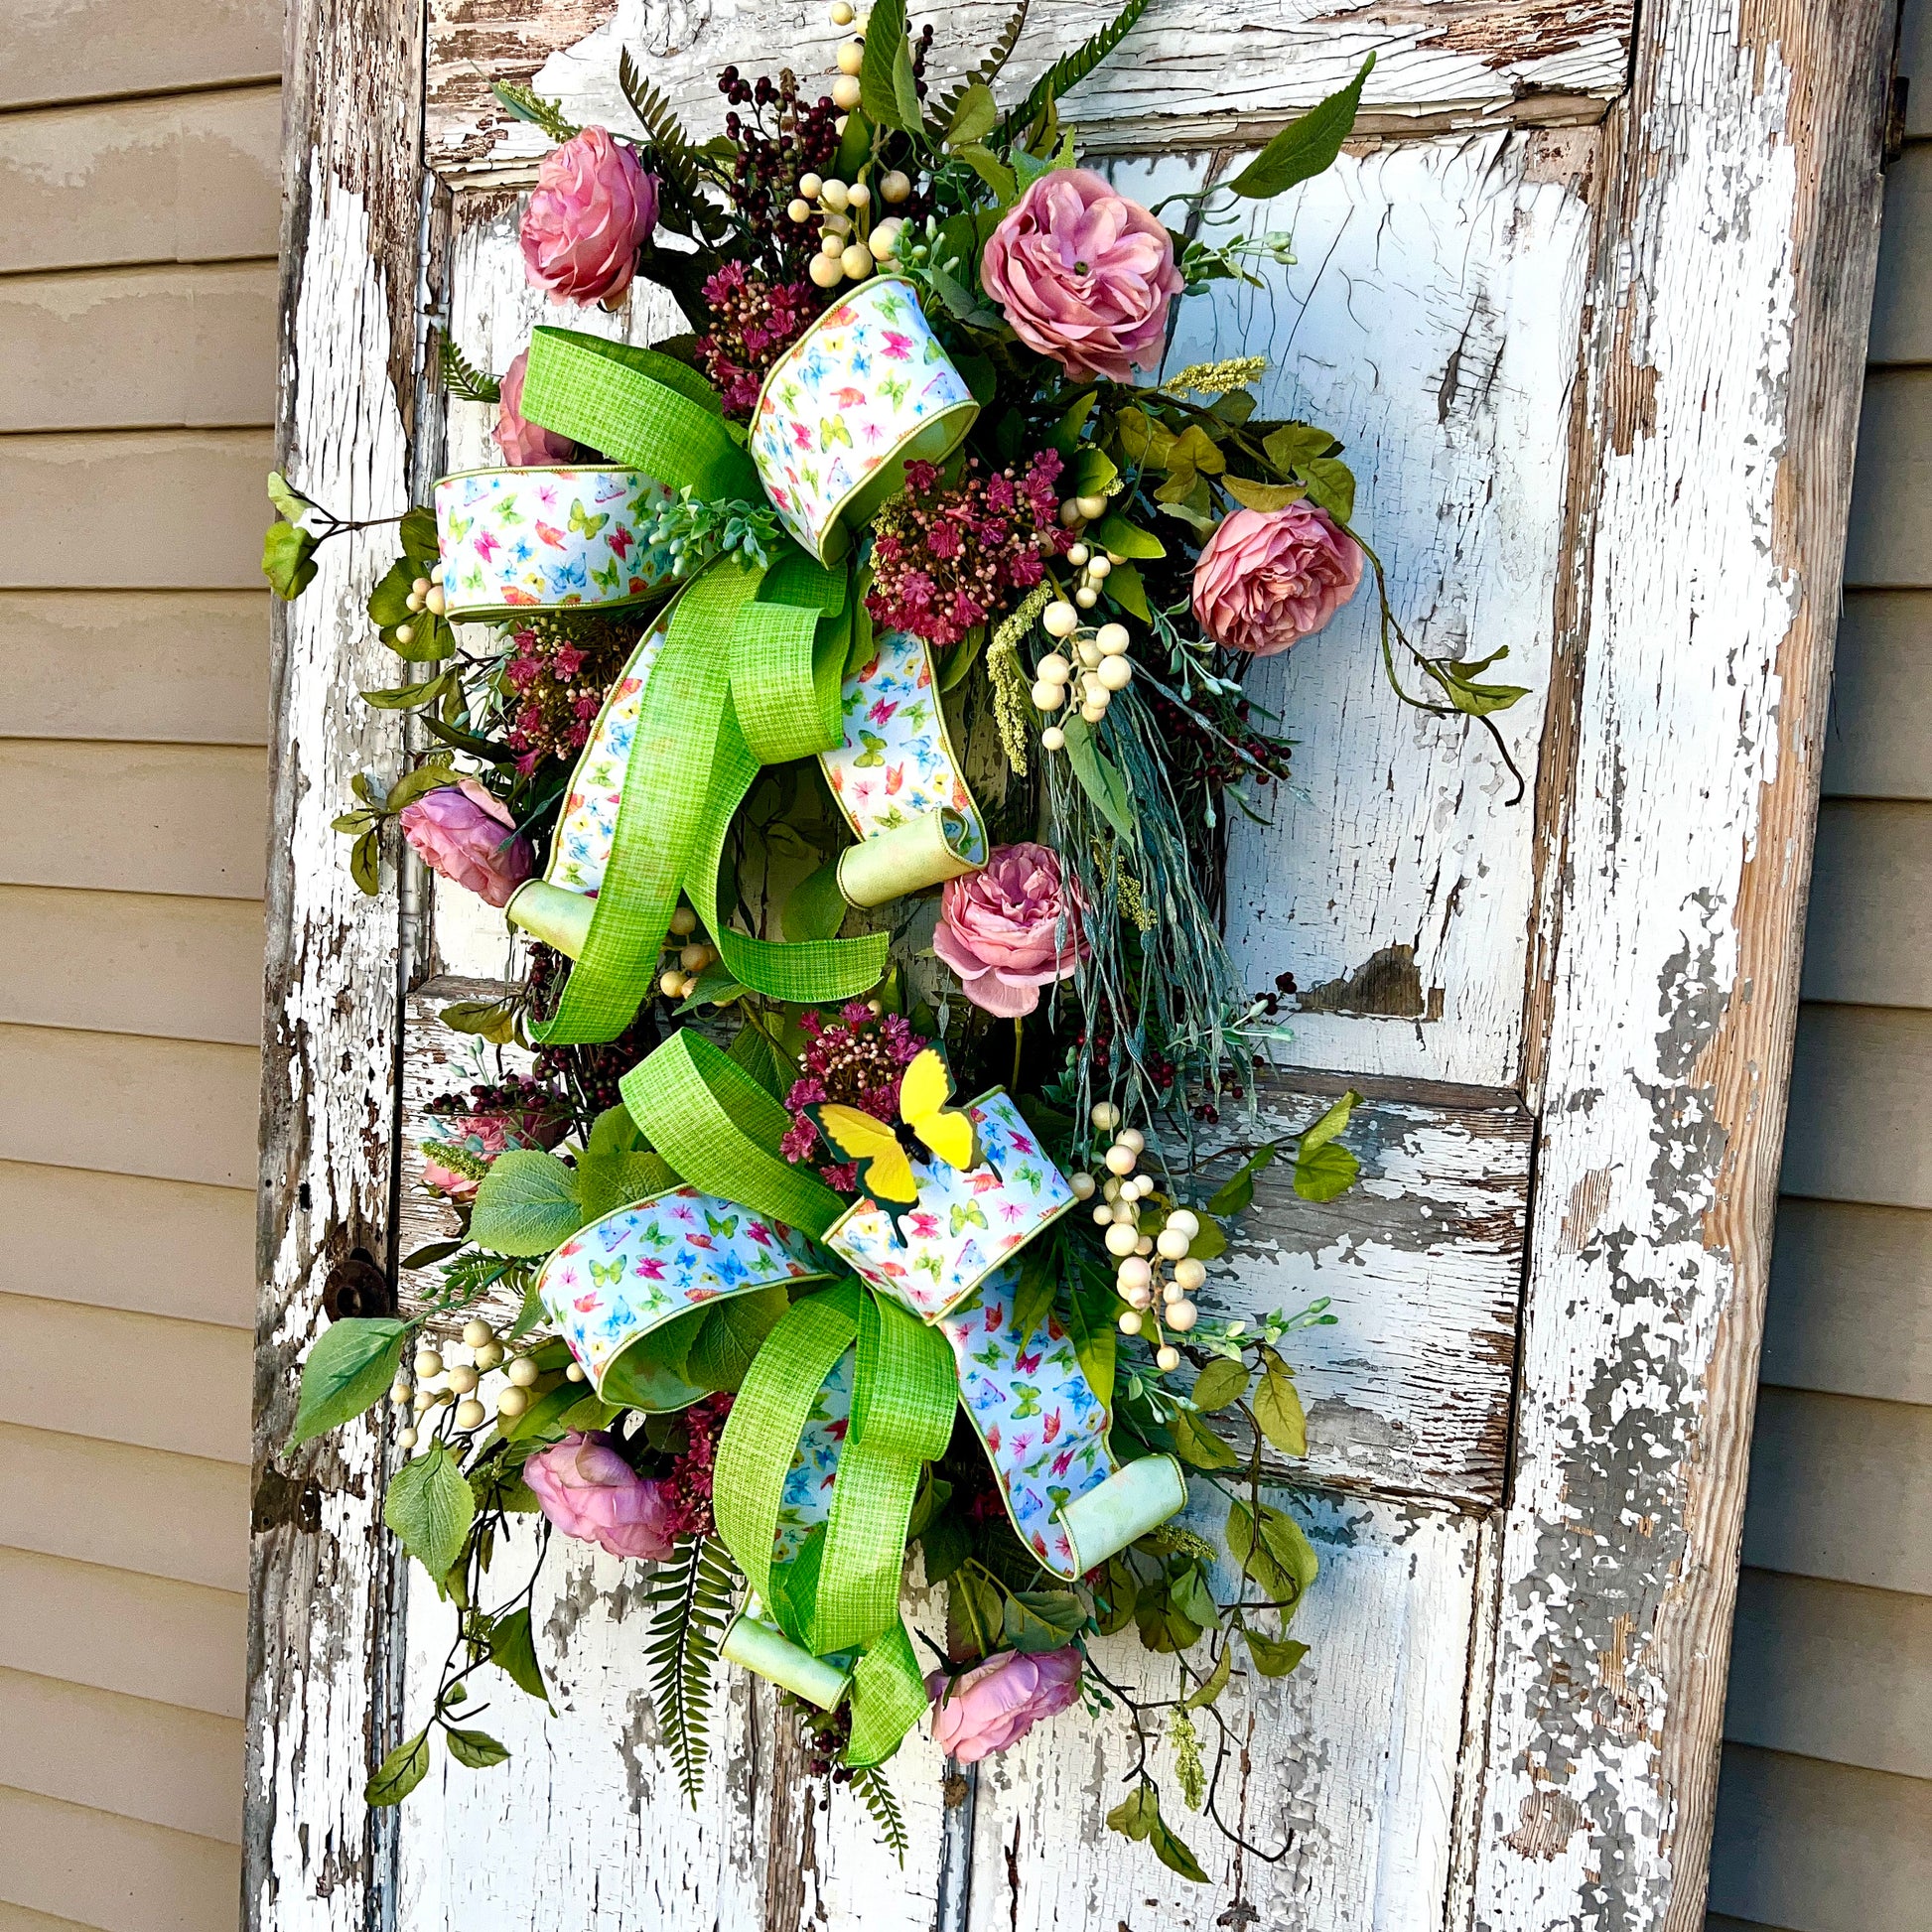 Spring Wreath for front door, Wreath for front door, Everyday wreath for front door, Year Round Wreath for front door, Home Decor,